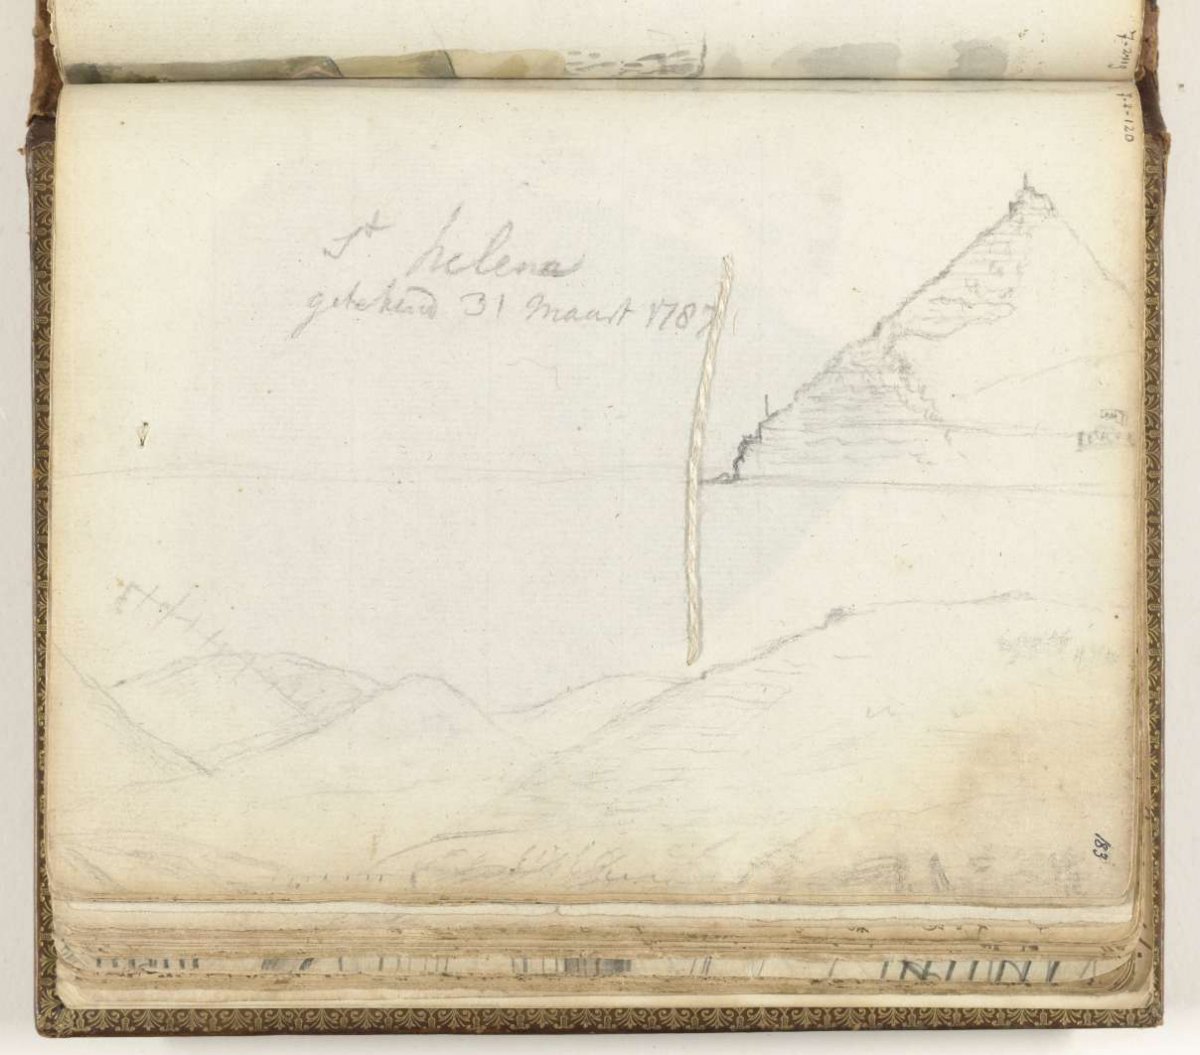 Sint Helena, Jan Brandes, 1787